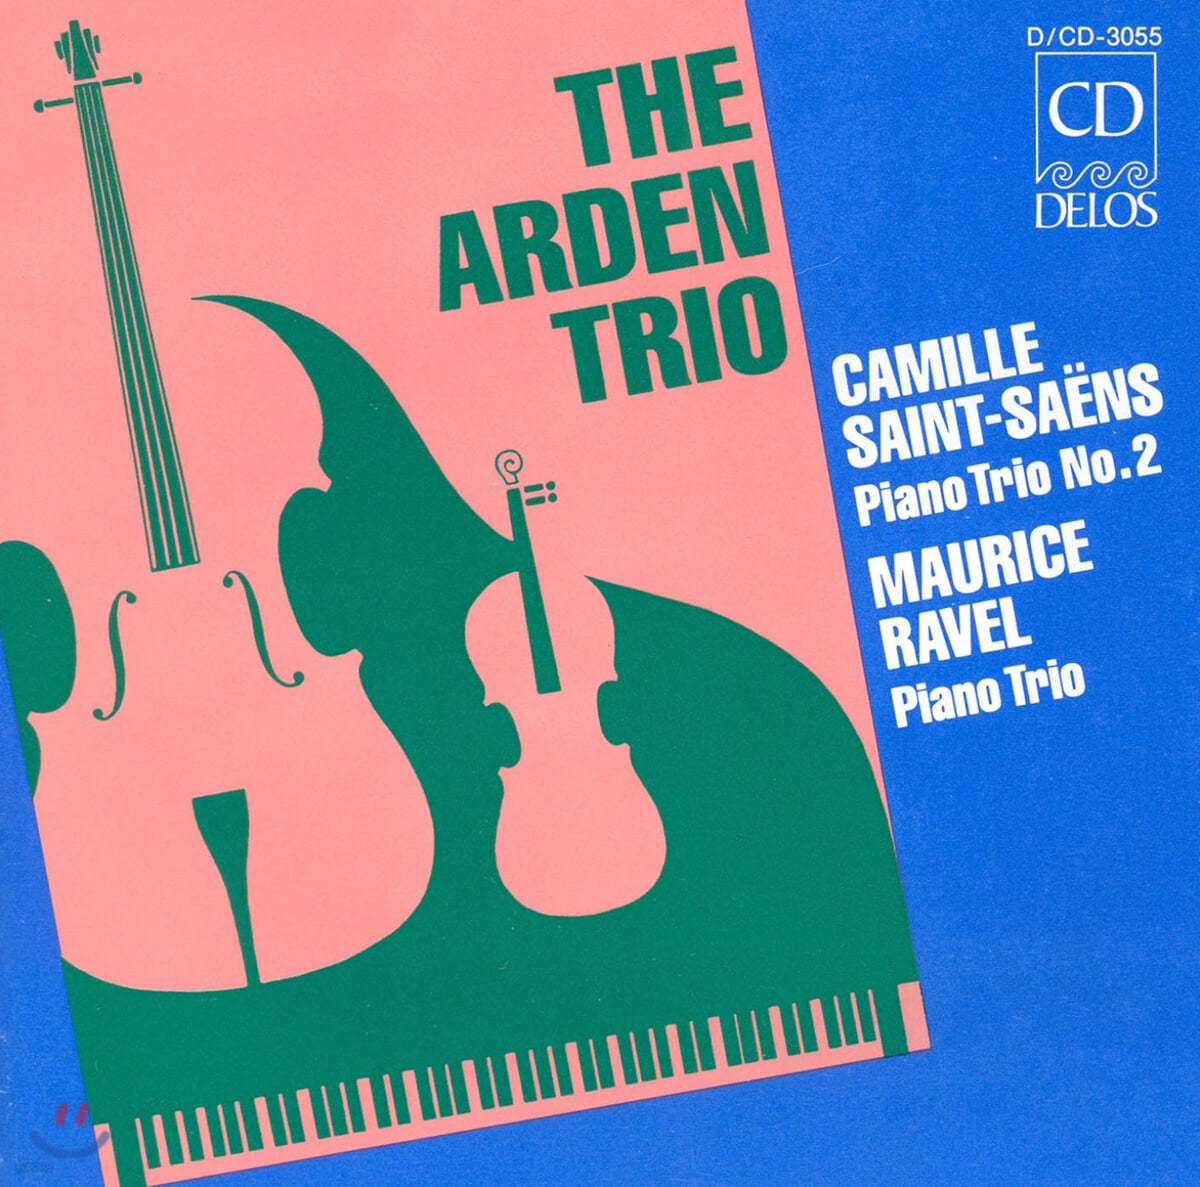 The Arden Trio 생상스 / 라벨: 피아노 트리오 (Saint-saens / Ravel : Piano Trio) 